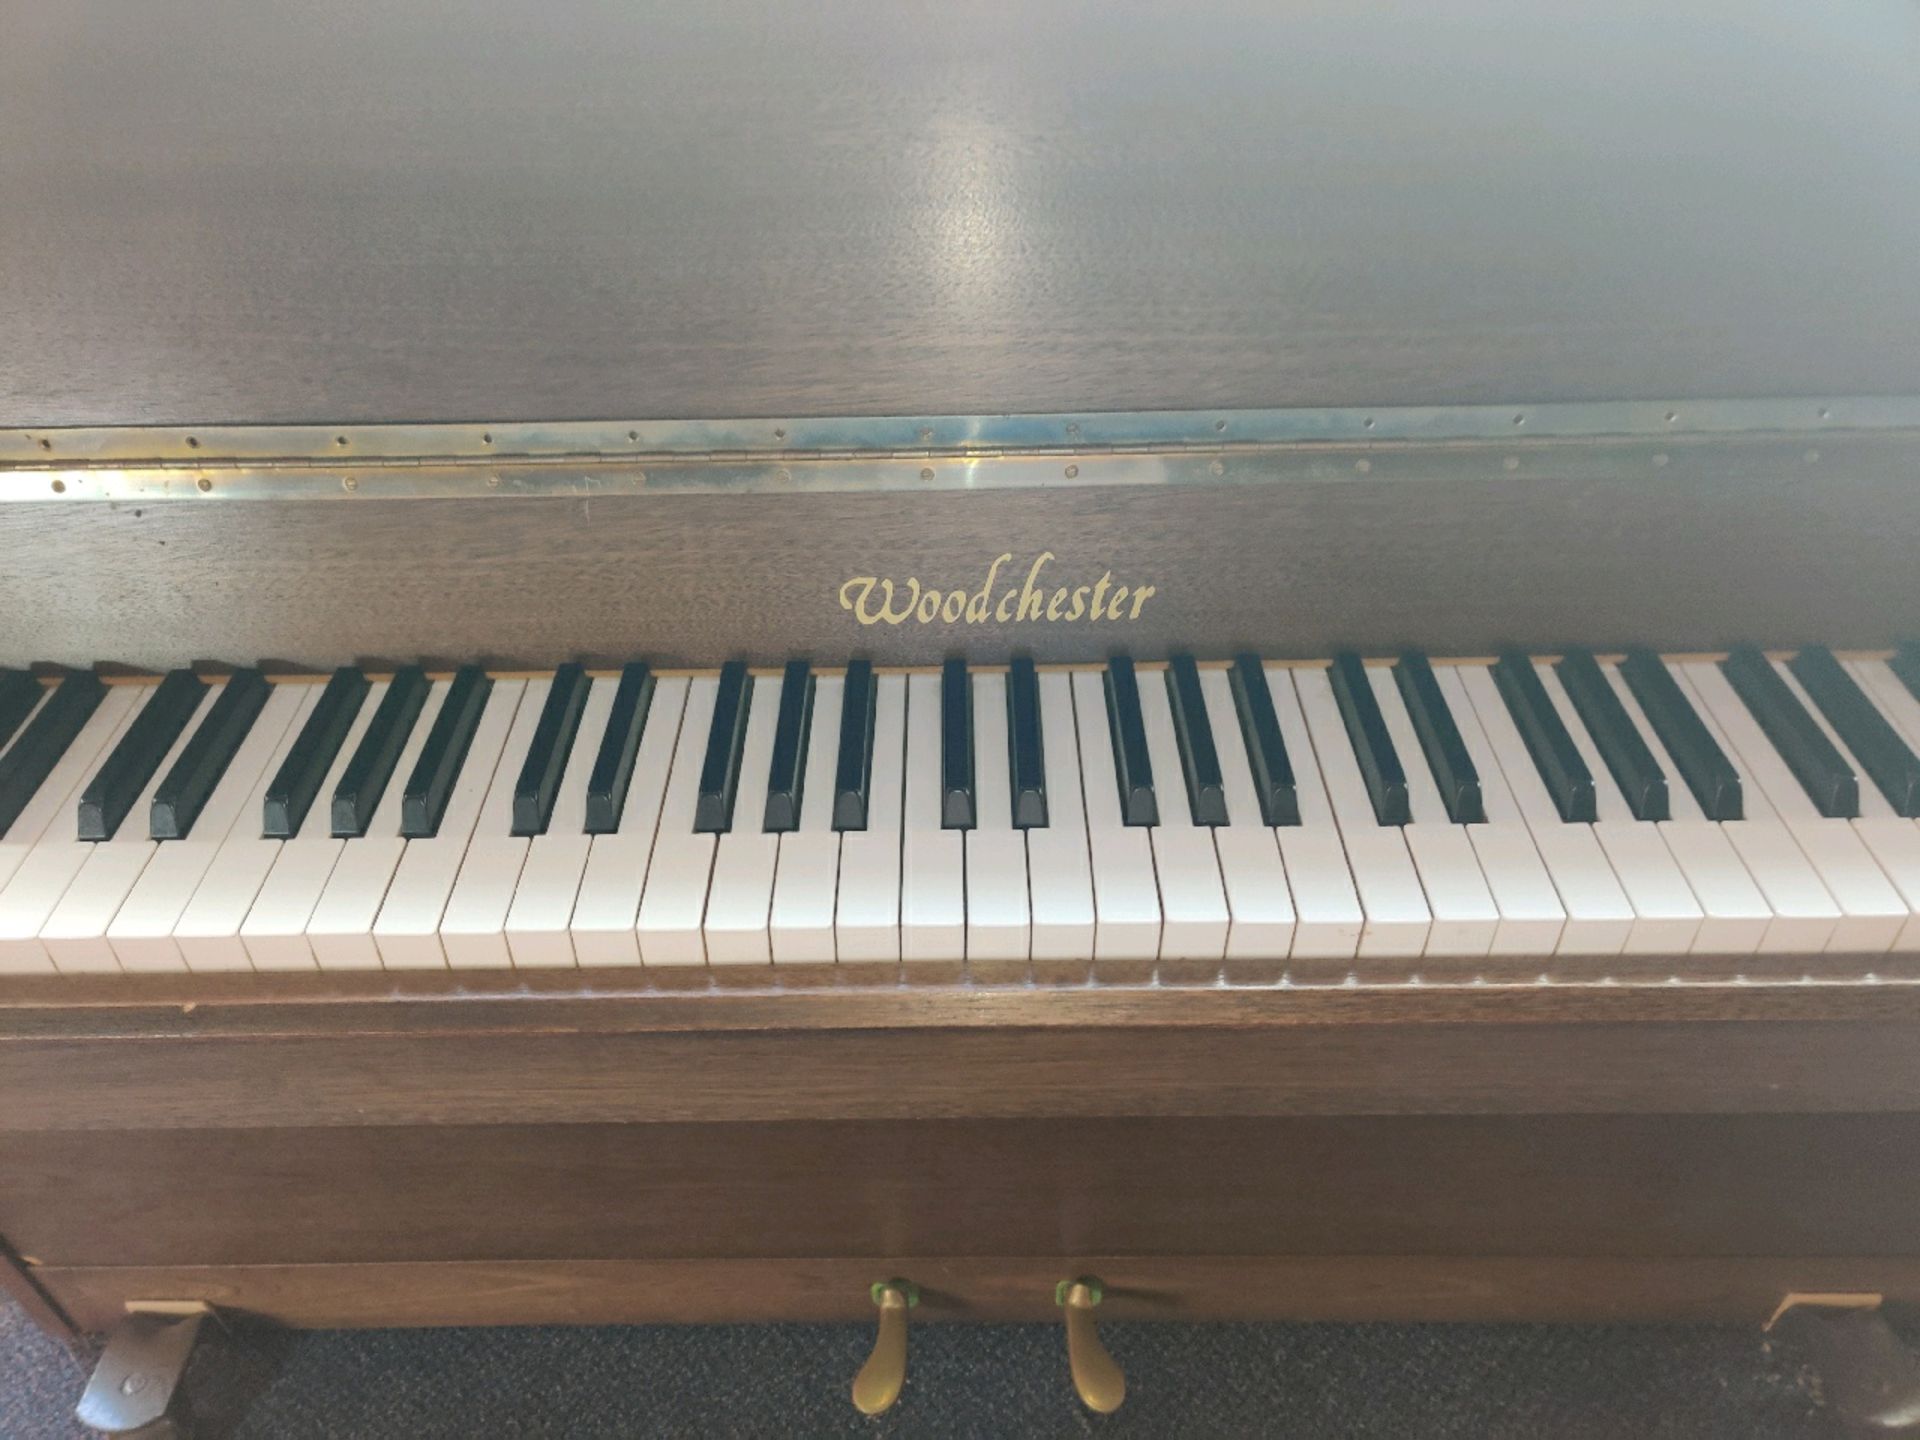 Woodchester upright piano